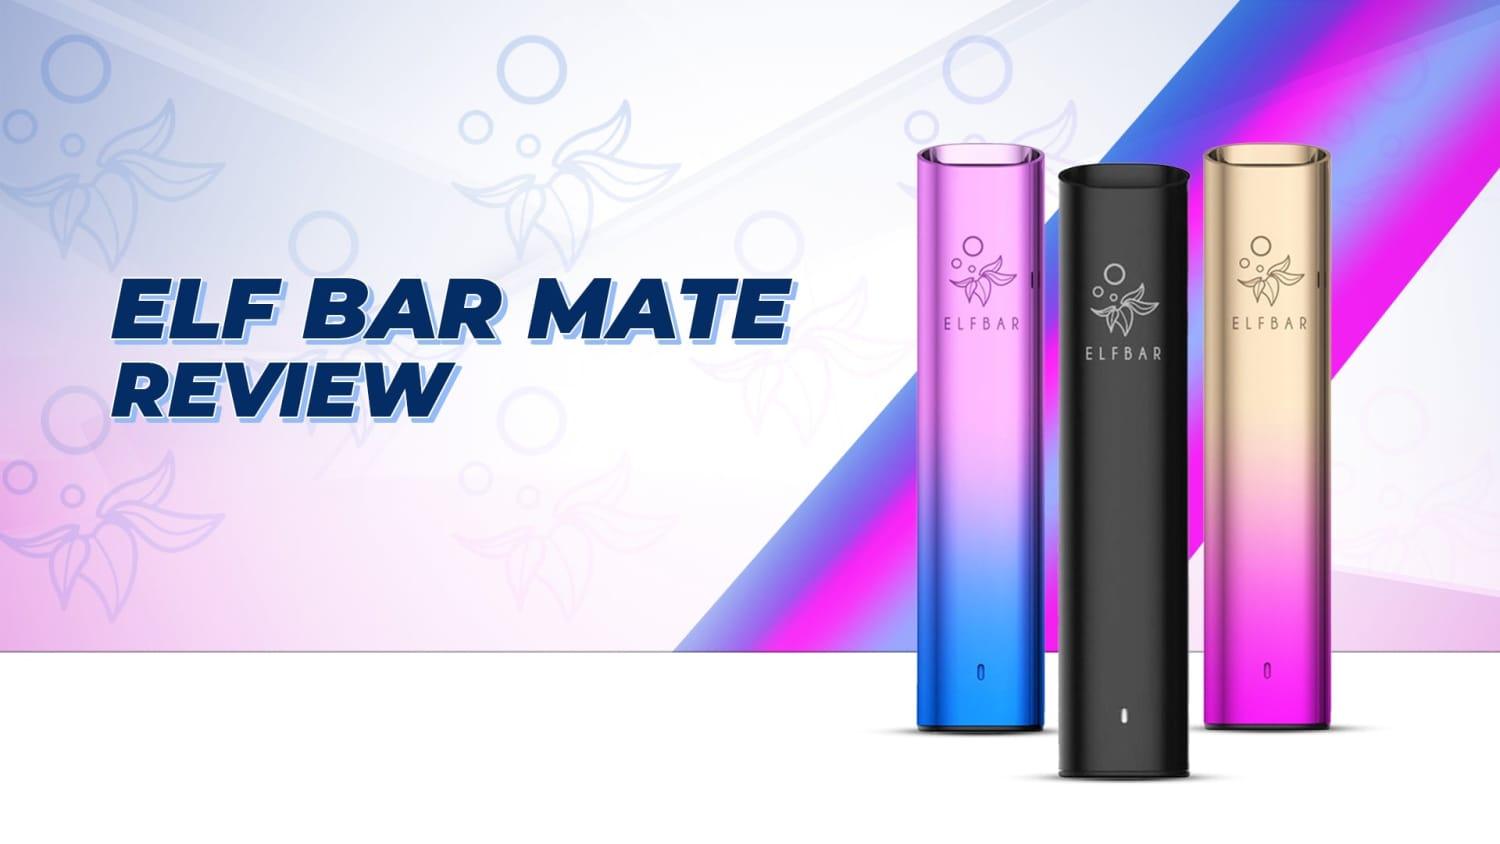 Elf Bar Mate 500 Review - Brand:Elf Bar, Category:Vape Kits, Sub Category:Pod Kits